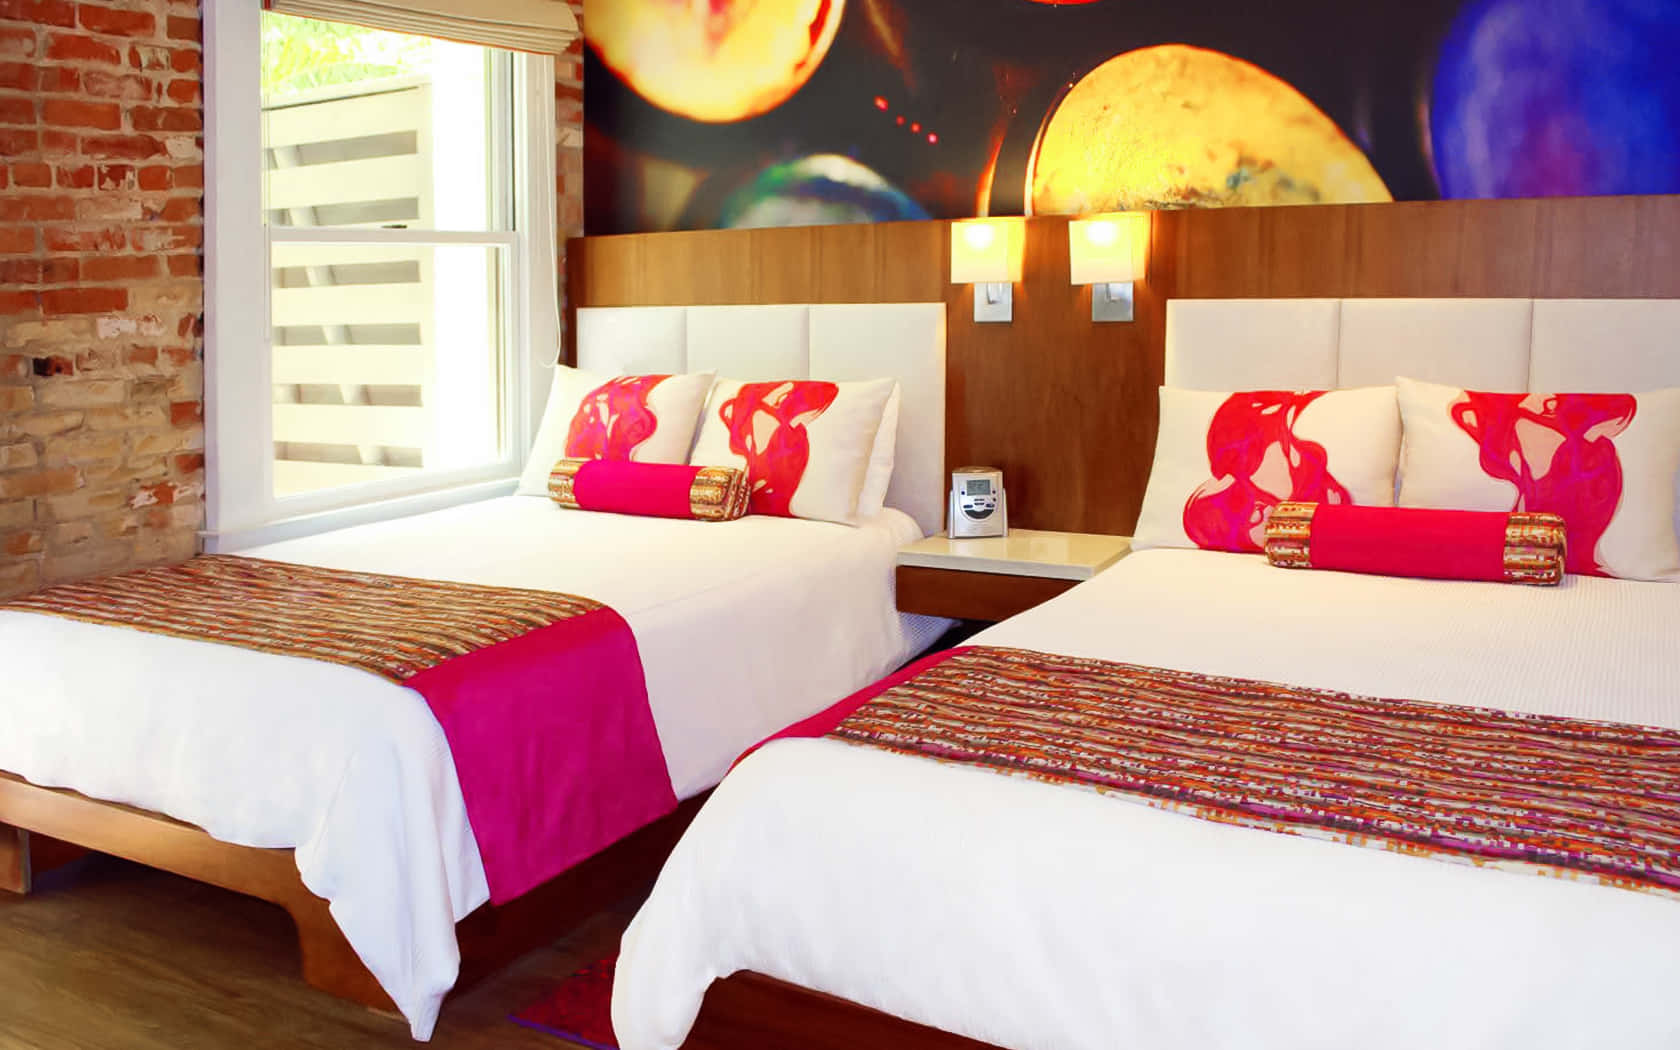 Luxury Hotel Room with Stunning Views